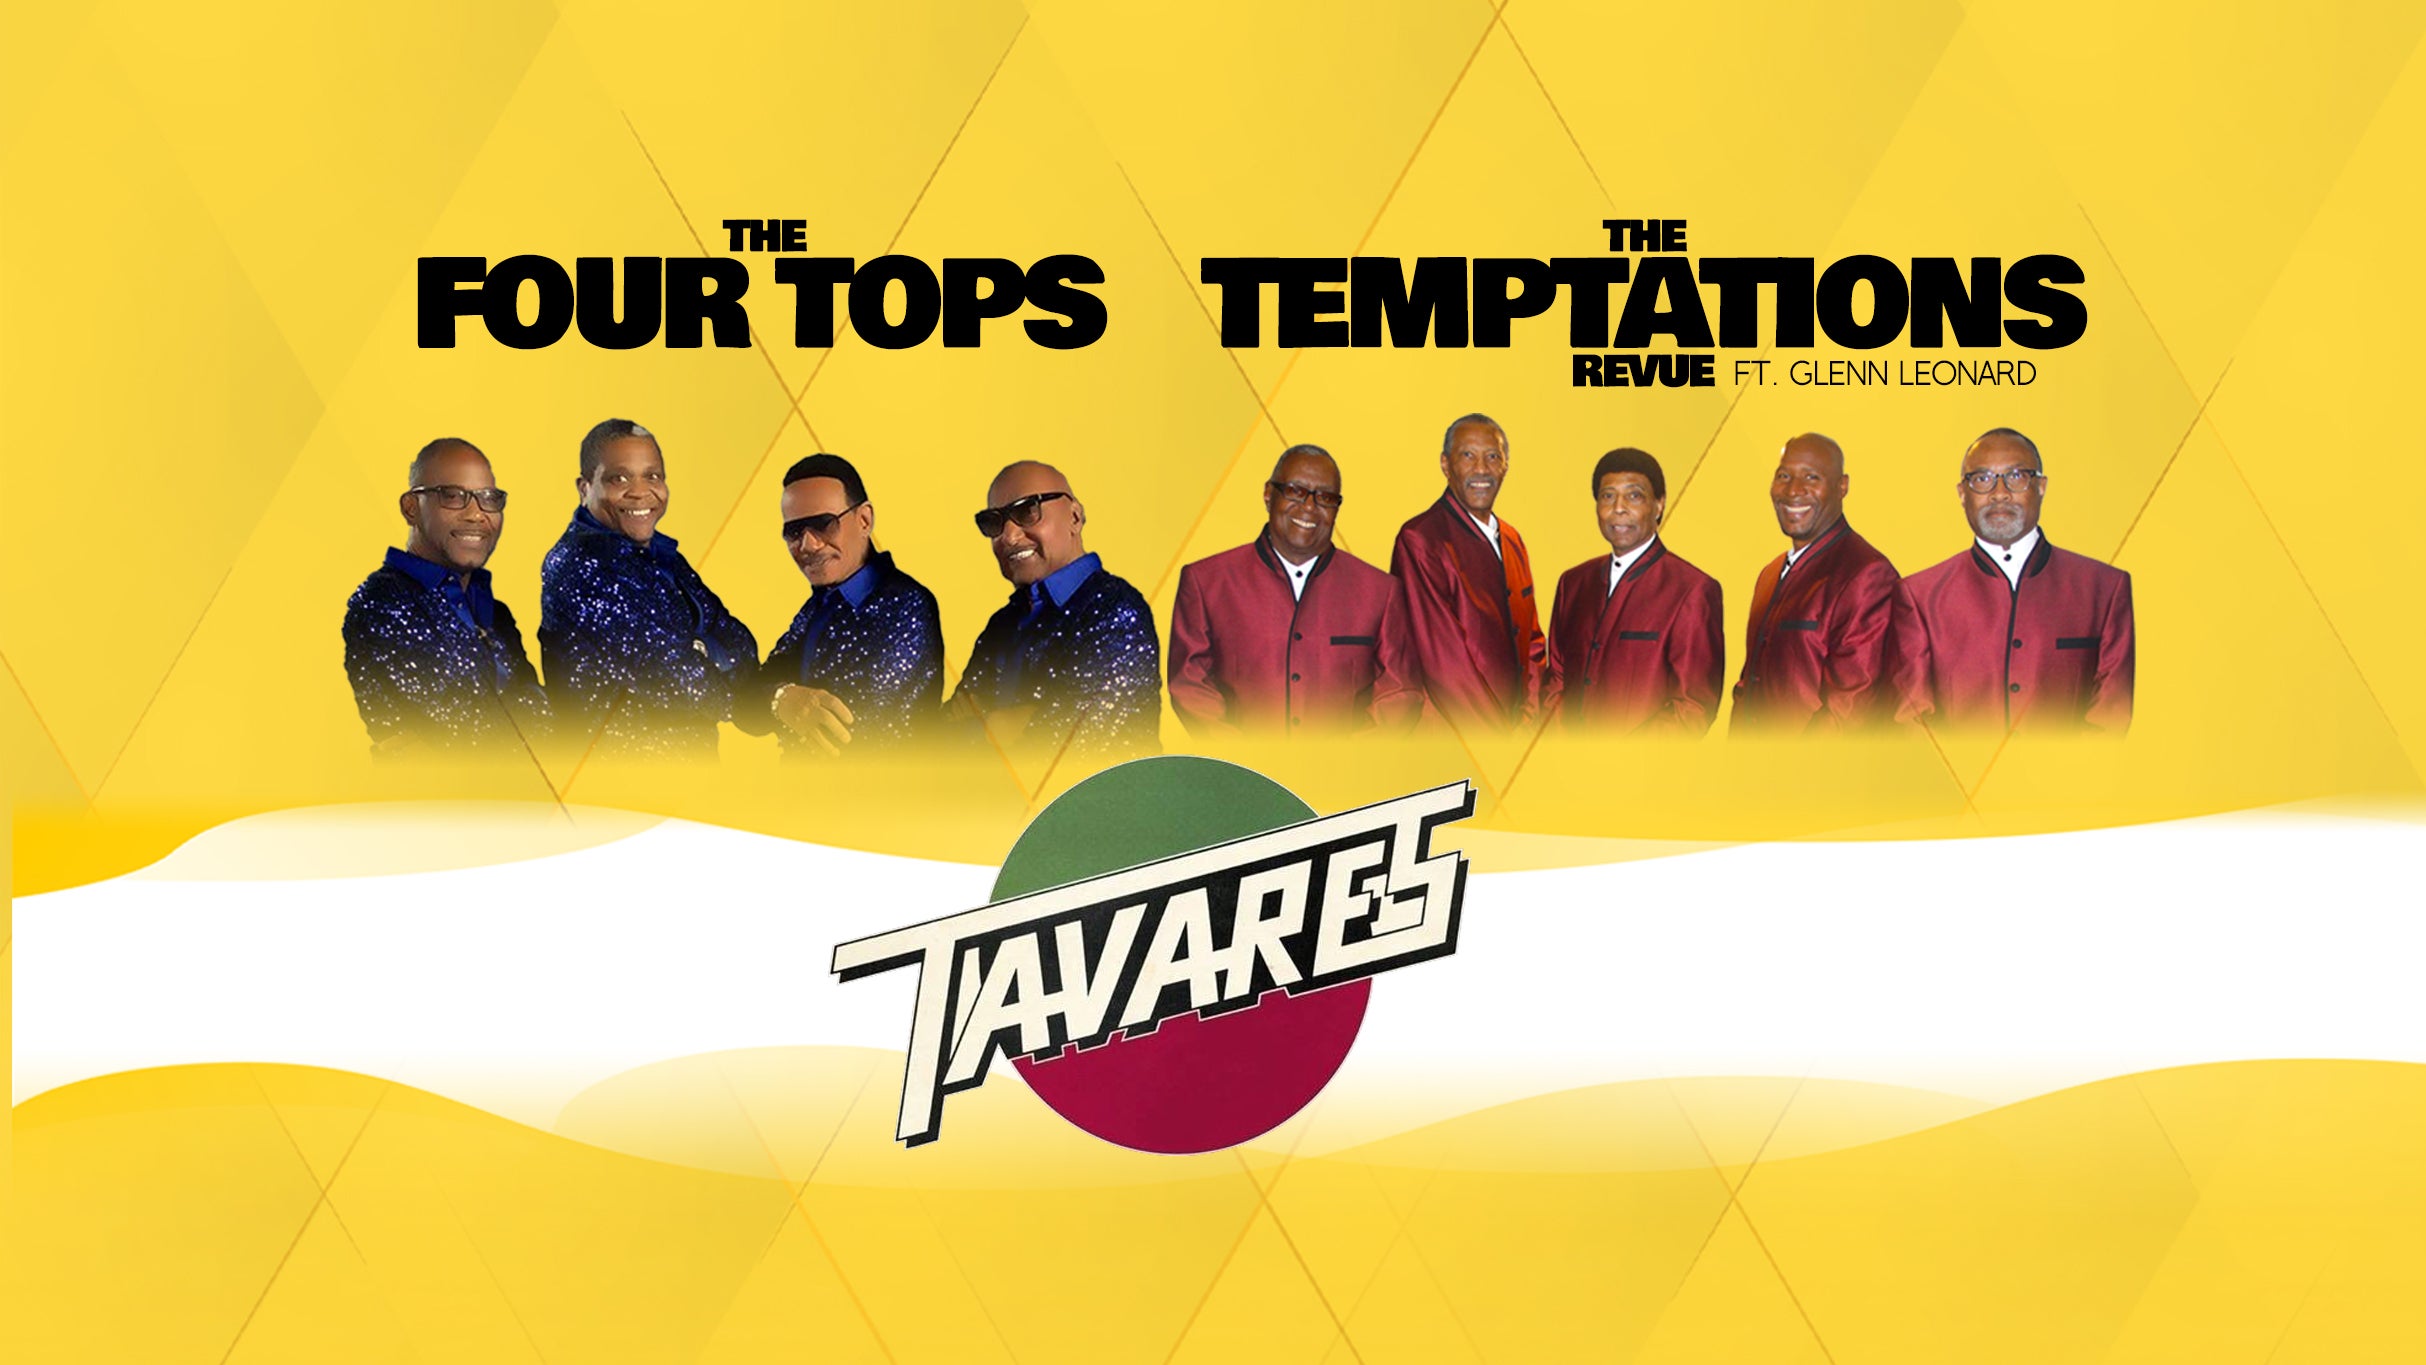 The Four Tops/ The Temptations revue ft. Glen Leonard/ Tavares